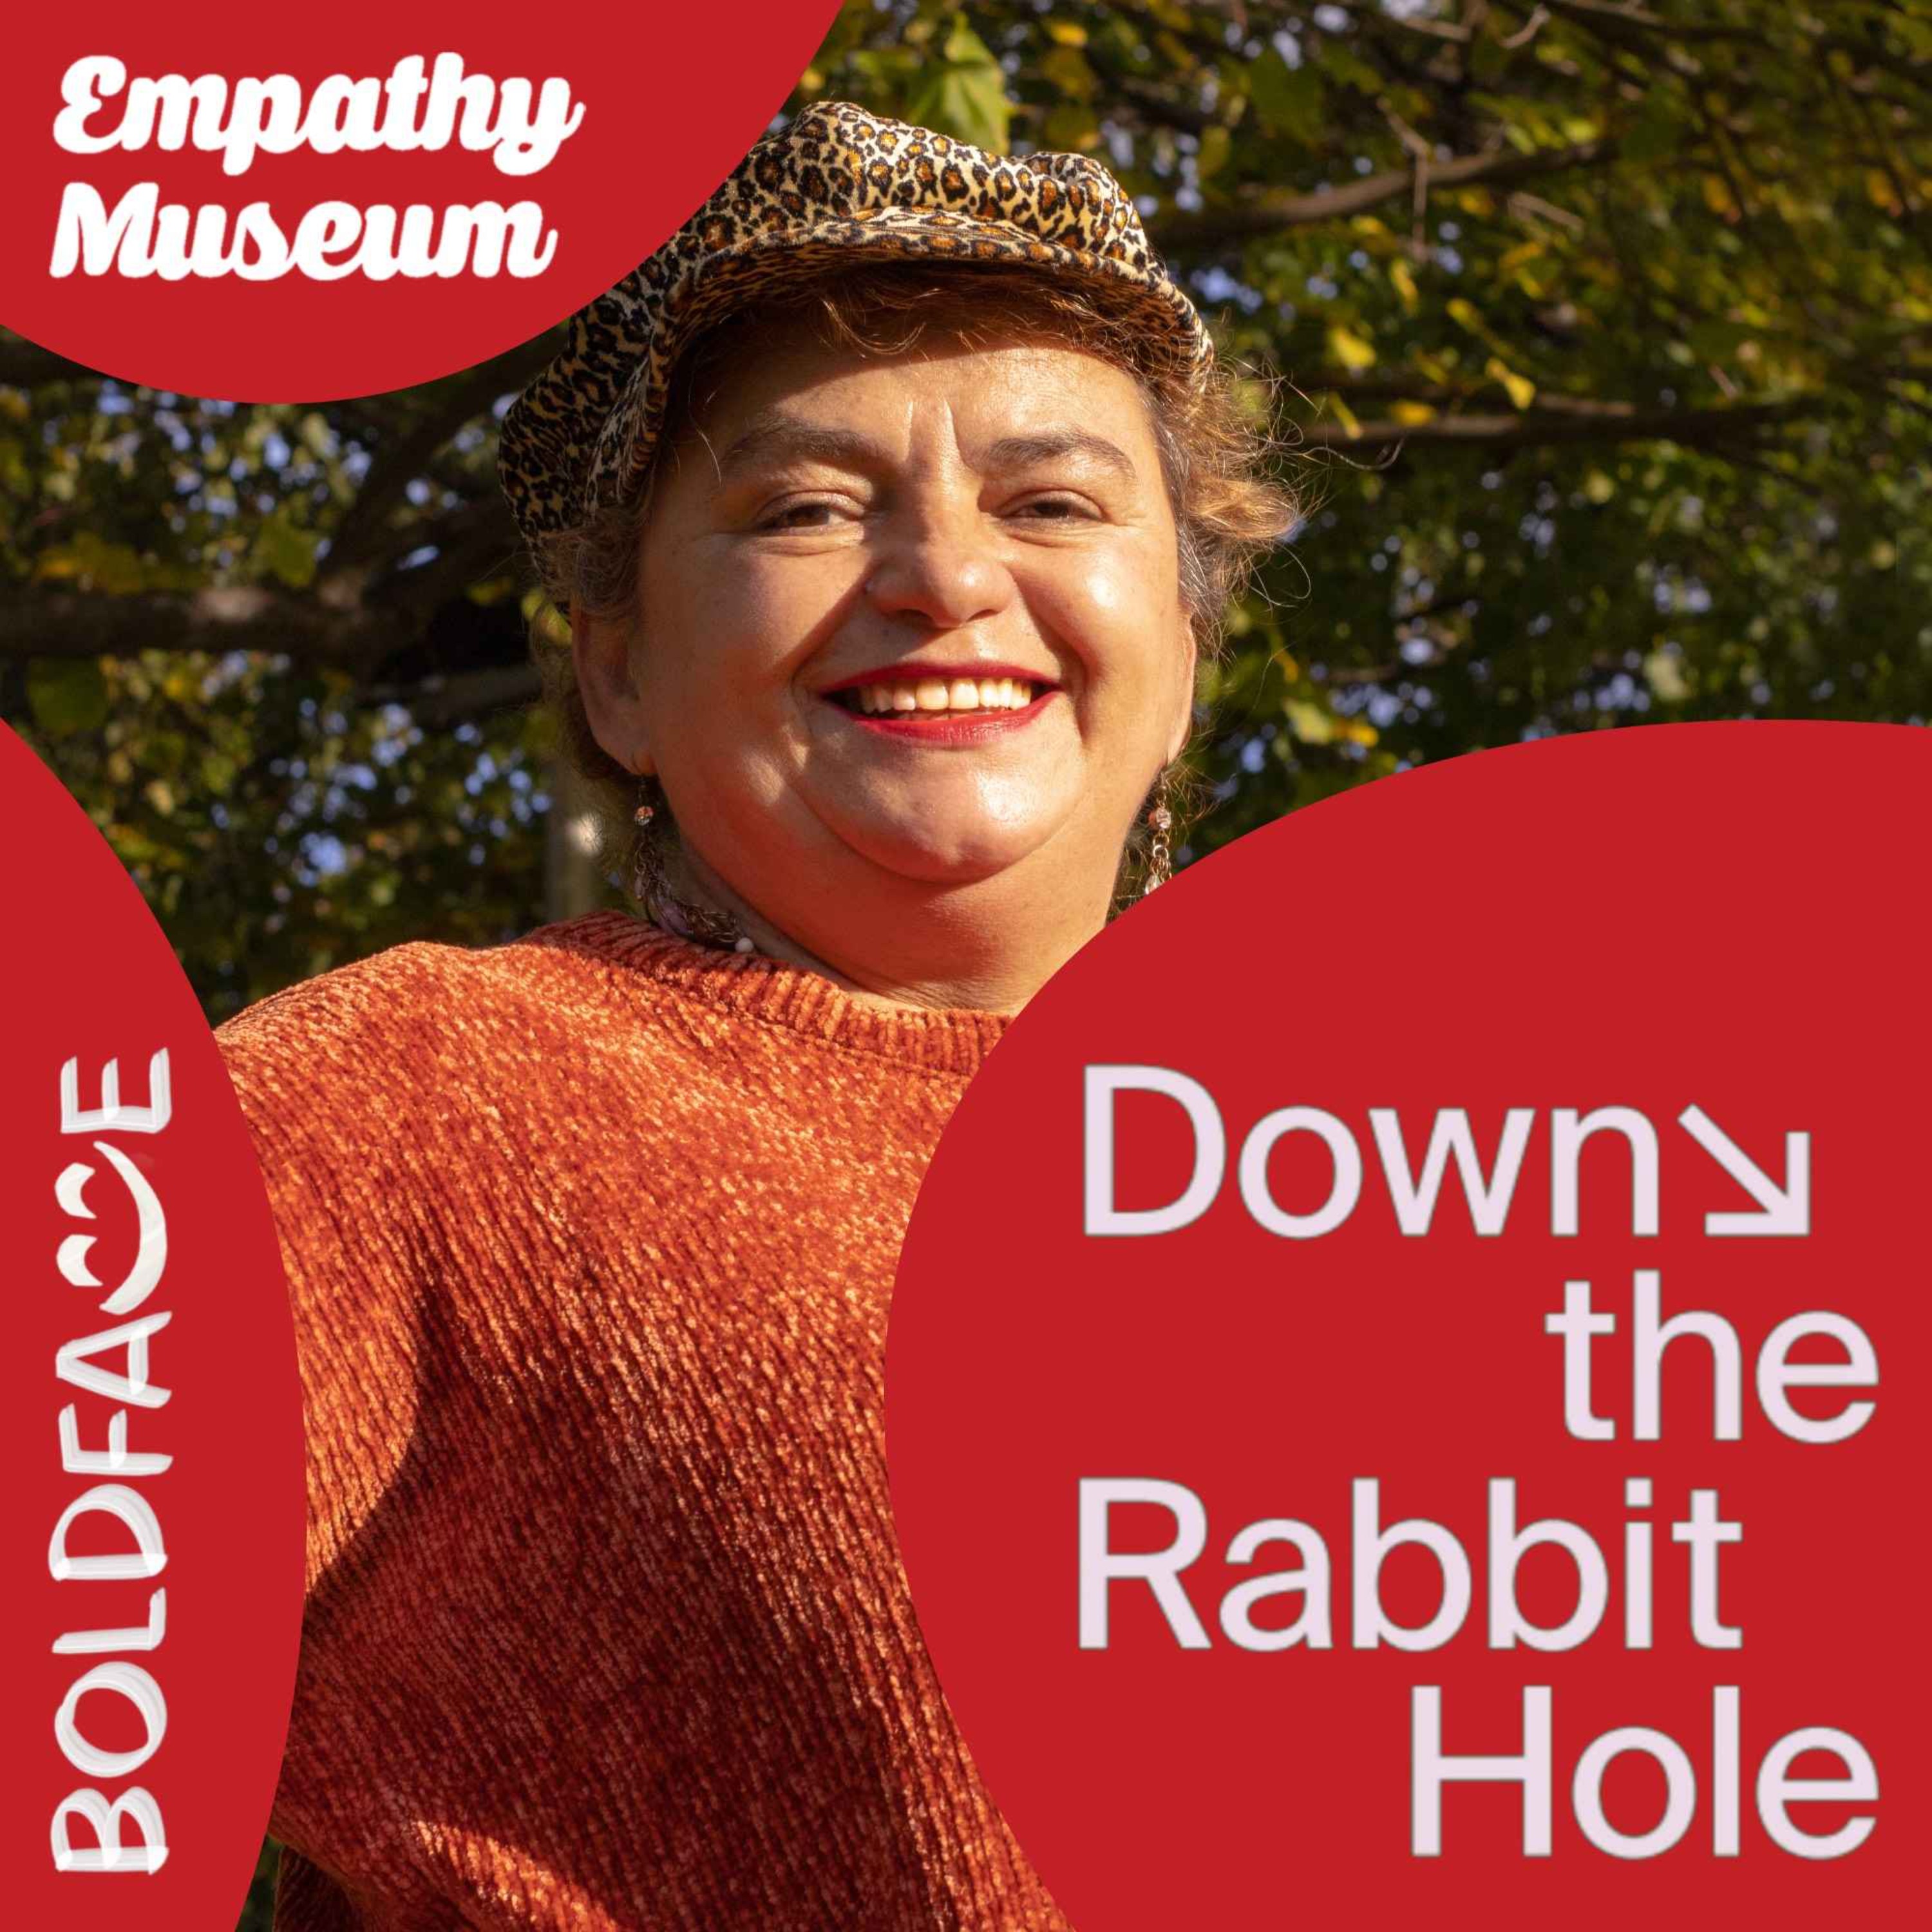 Down the Rabbit Hole #2 – Elizabeth’s story